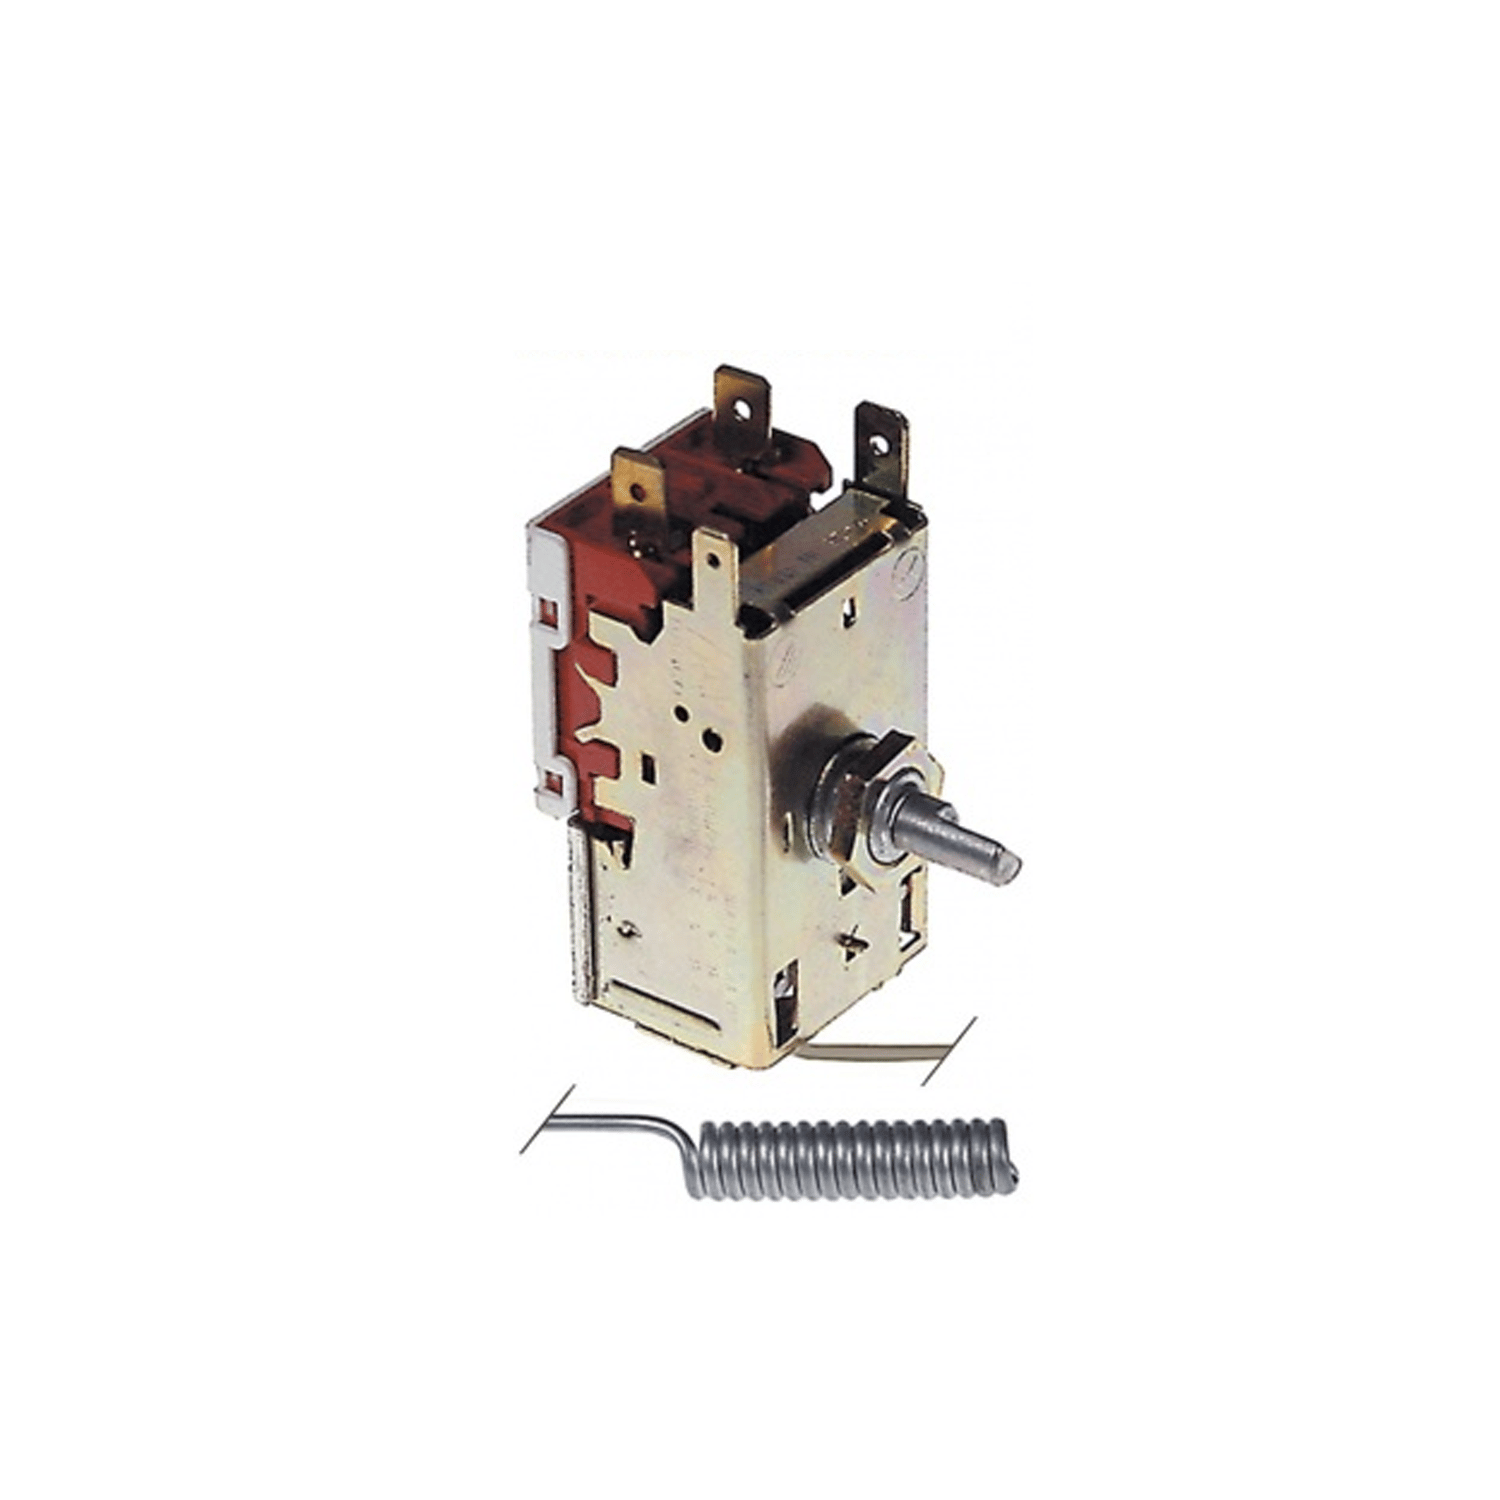 Thermostat RANCO K50-P1545 / 001 Sonde ø 9mm Sonde longueur 40mm Tube capillaire 1250mm